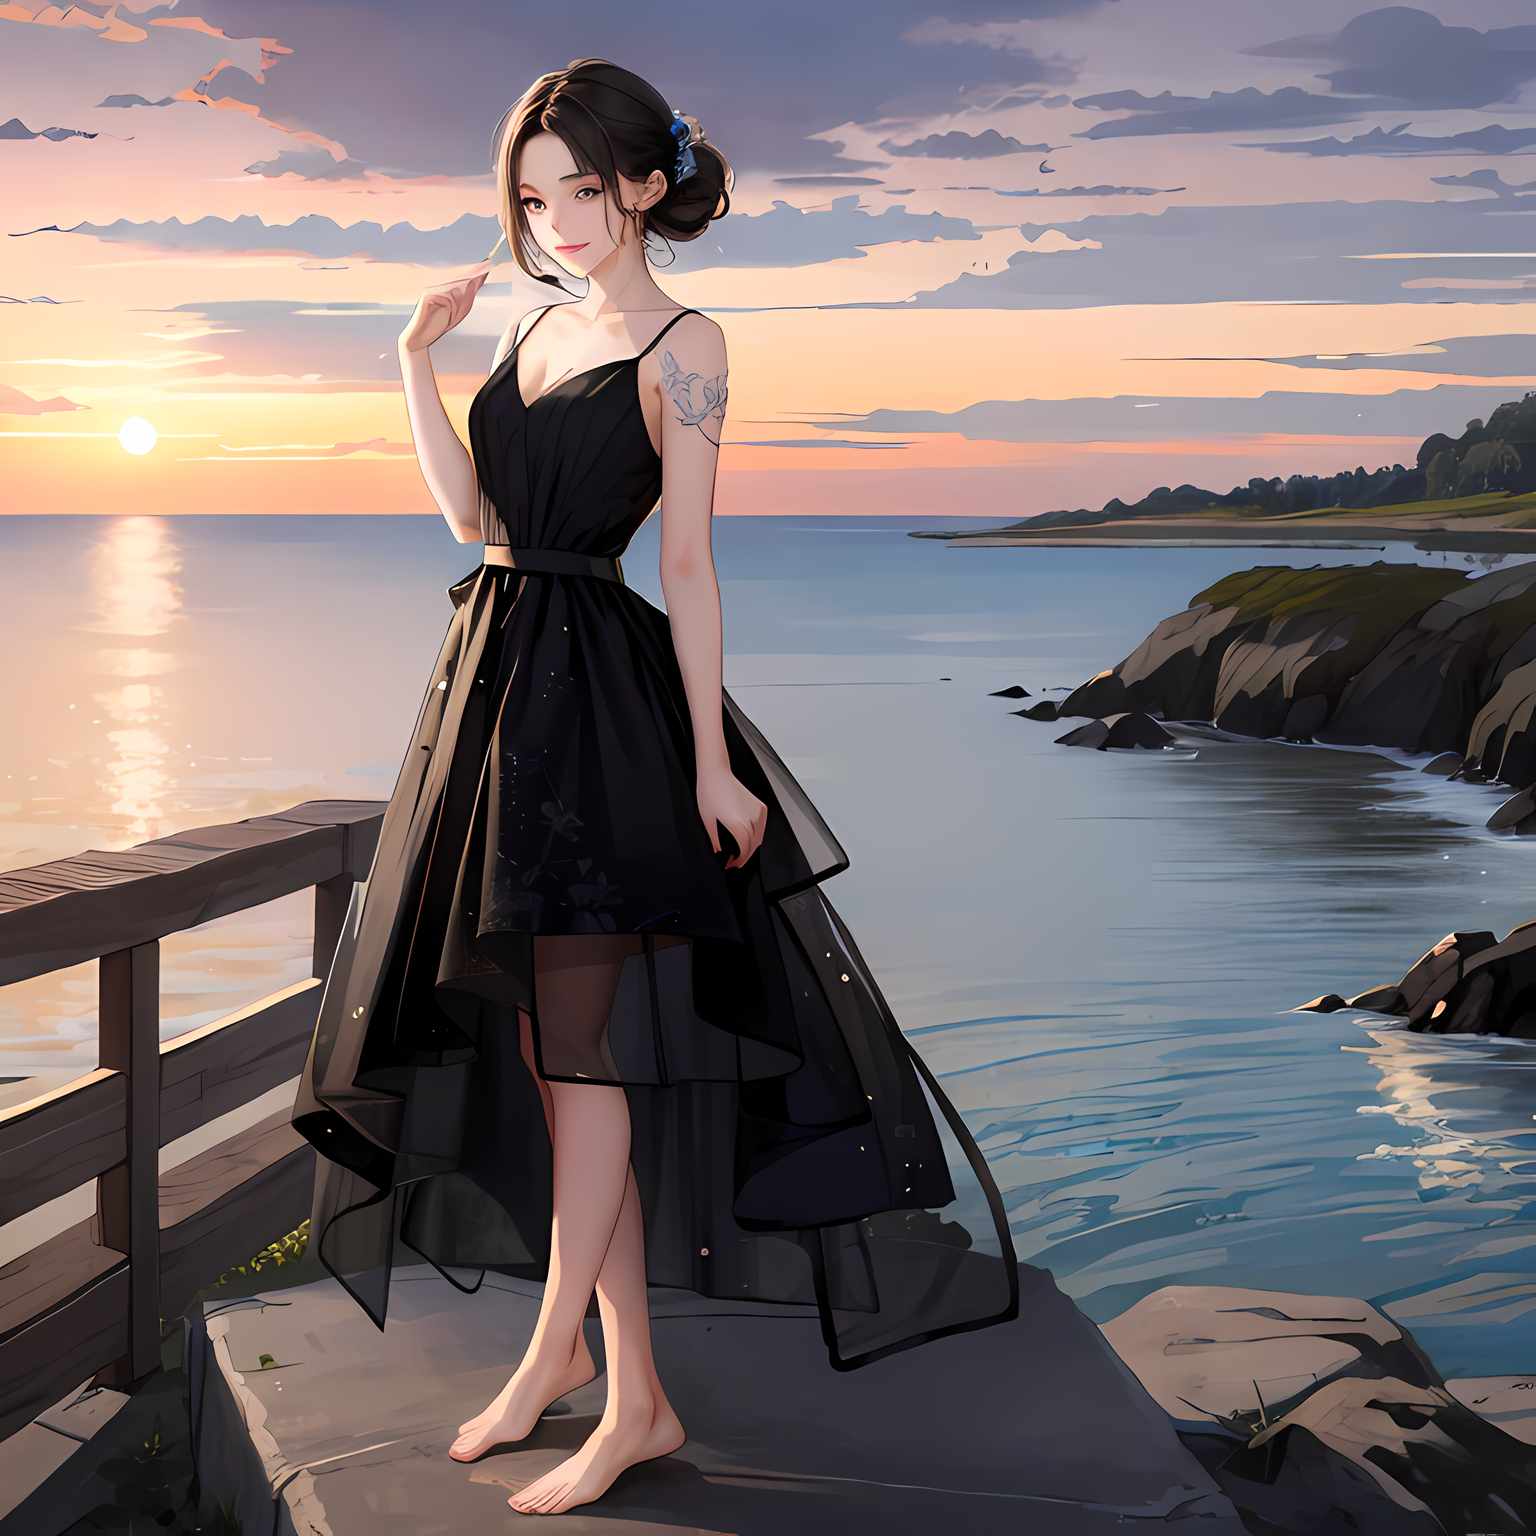 少女海岸画 (Girl Coastal Painting)